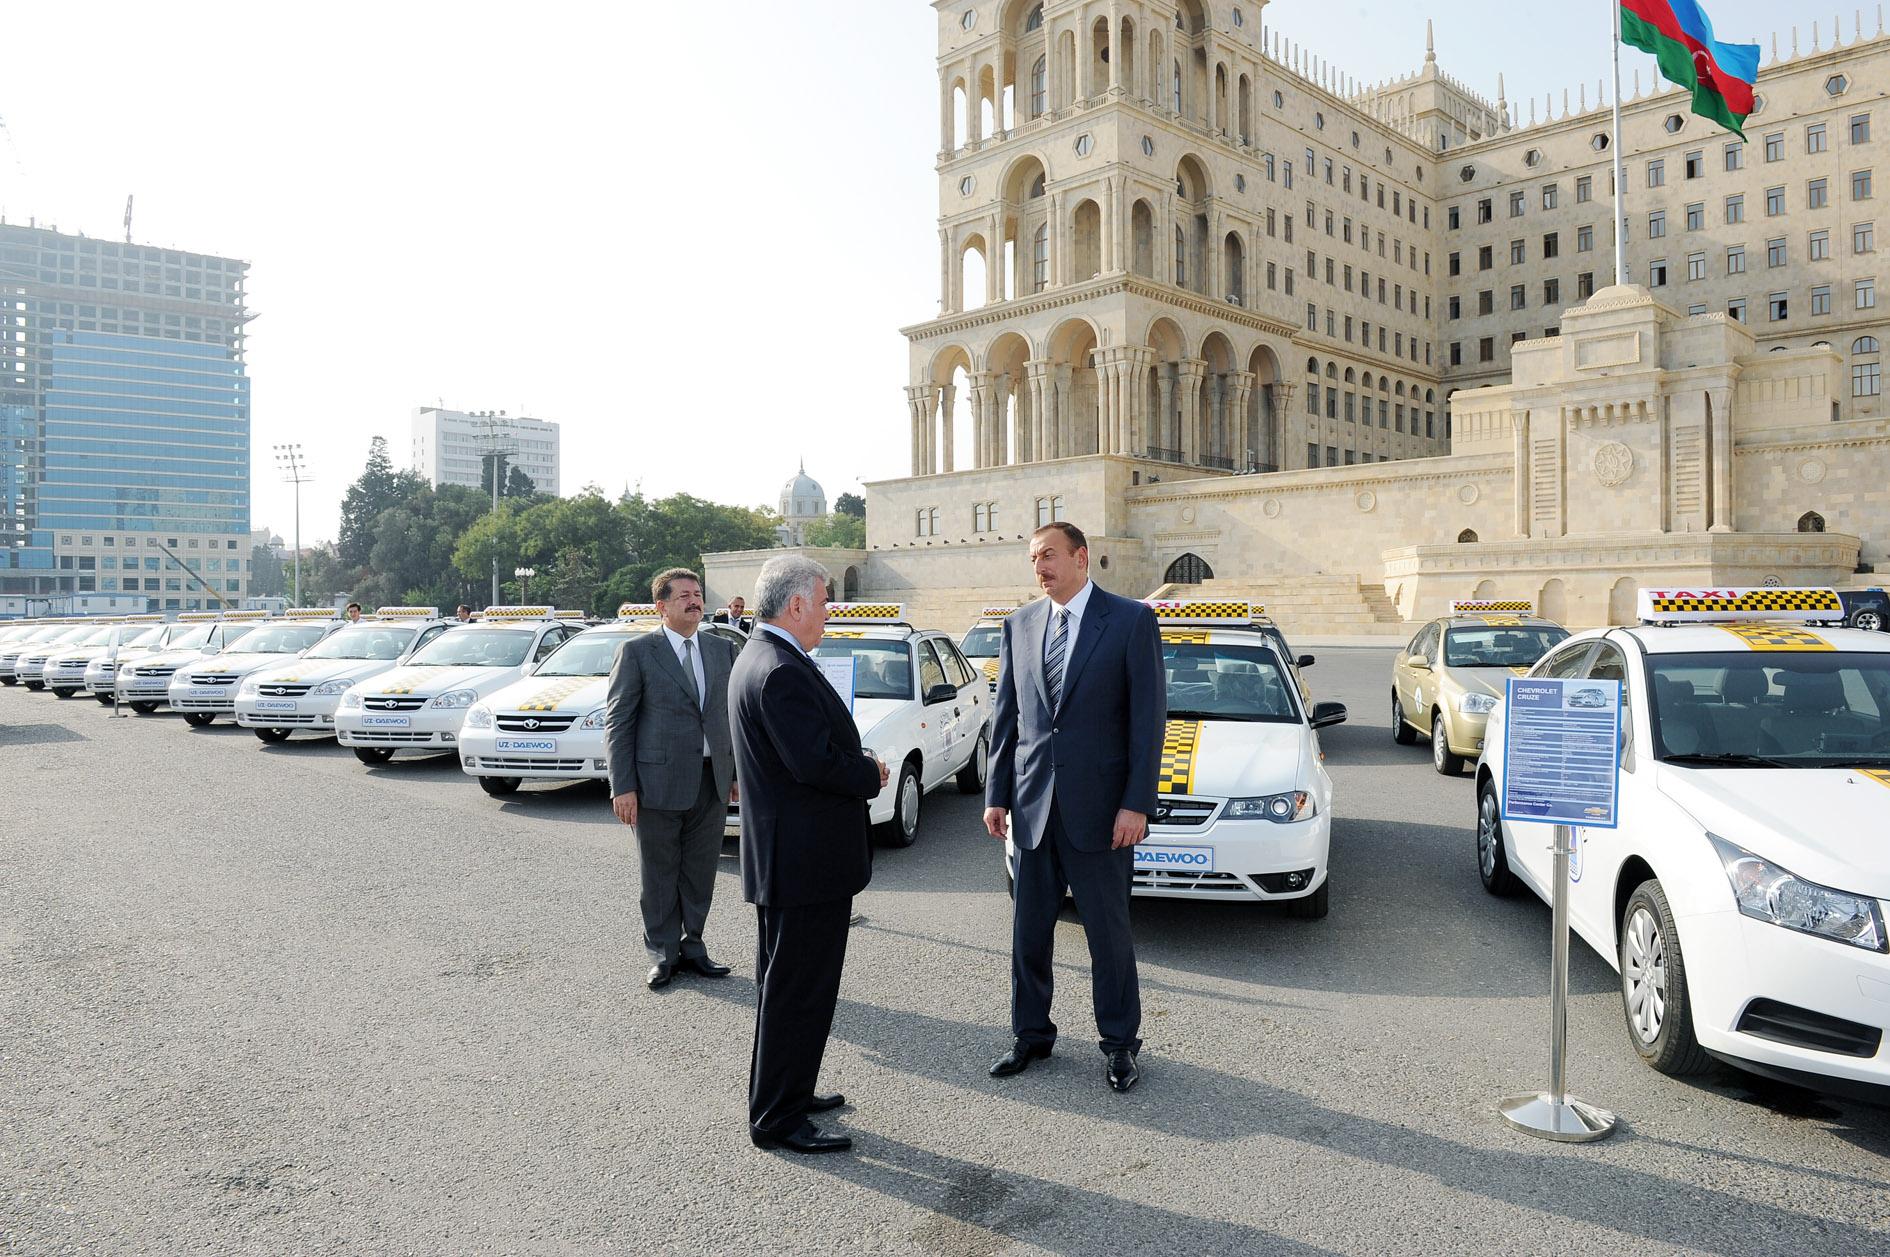 Такси в азербайджане. Автомобиль президента Азербайджана. Лондонское такси в Азербайджане. Таксисты в Баку.